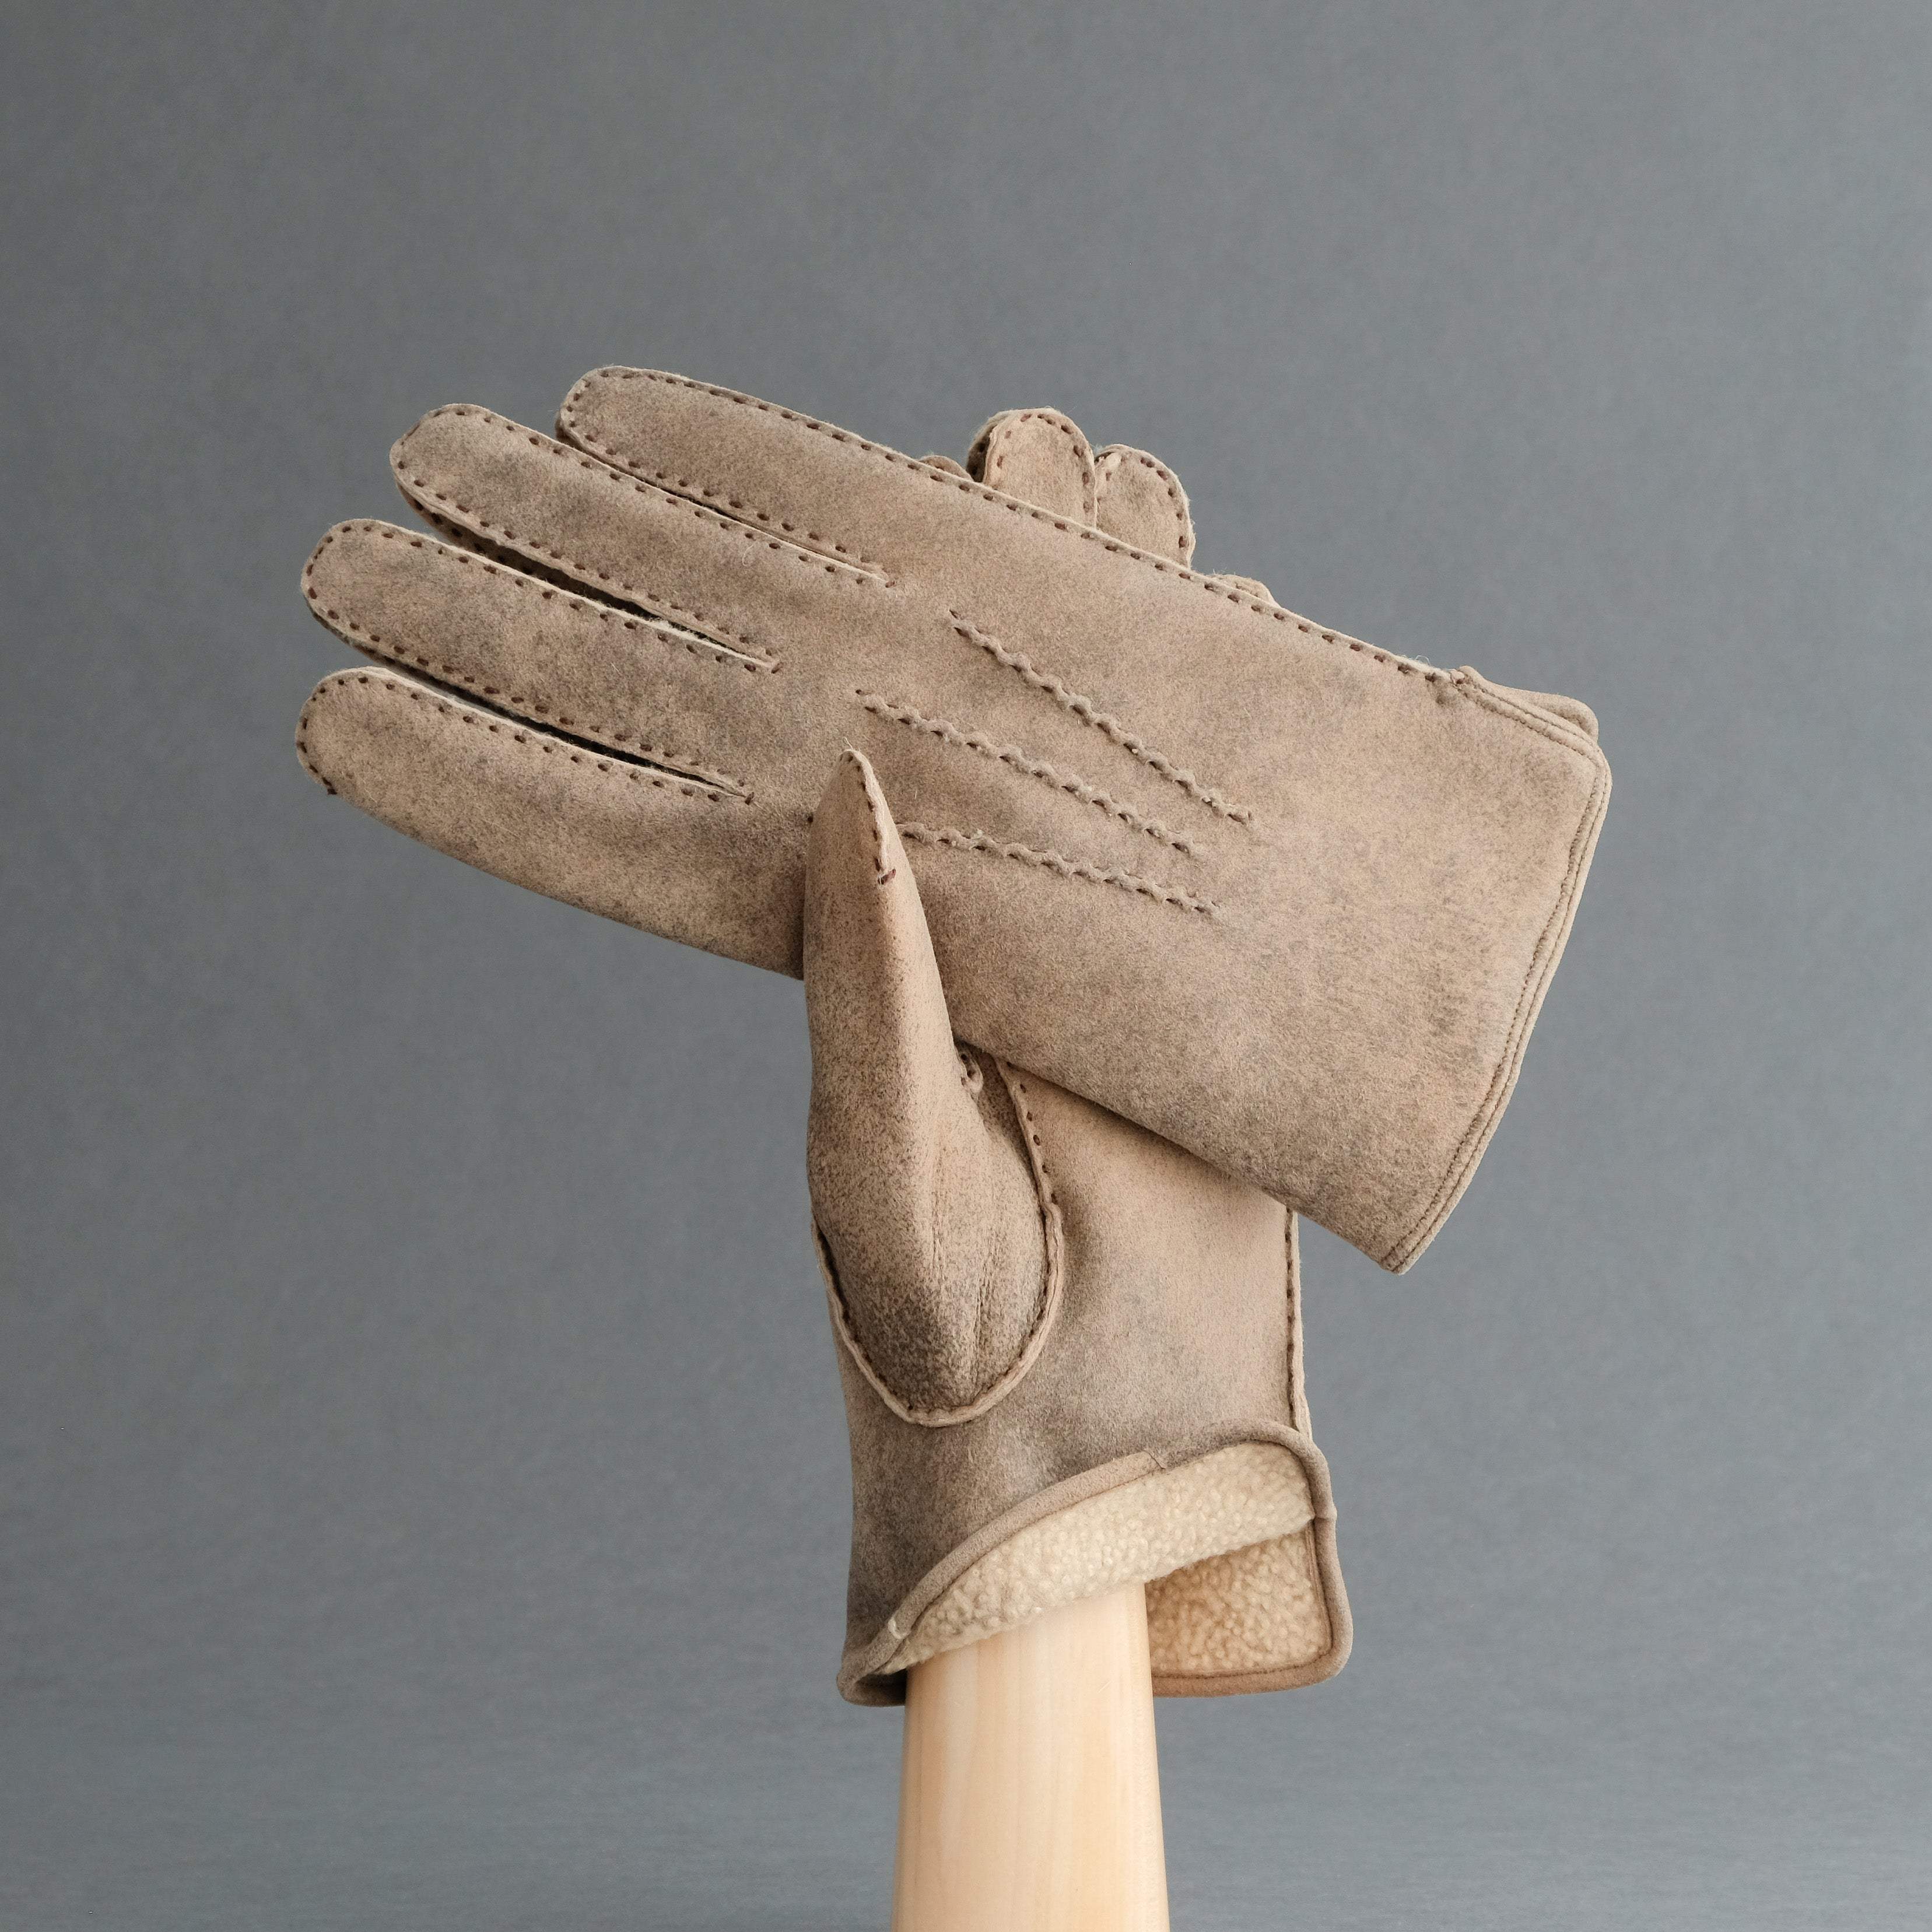 Gentlemen's Hand Sewn Gloves From Antique Brown Curly Lambskin - TR Handschuhe Wien - Thomas Riemer Handmade Gloves